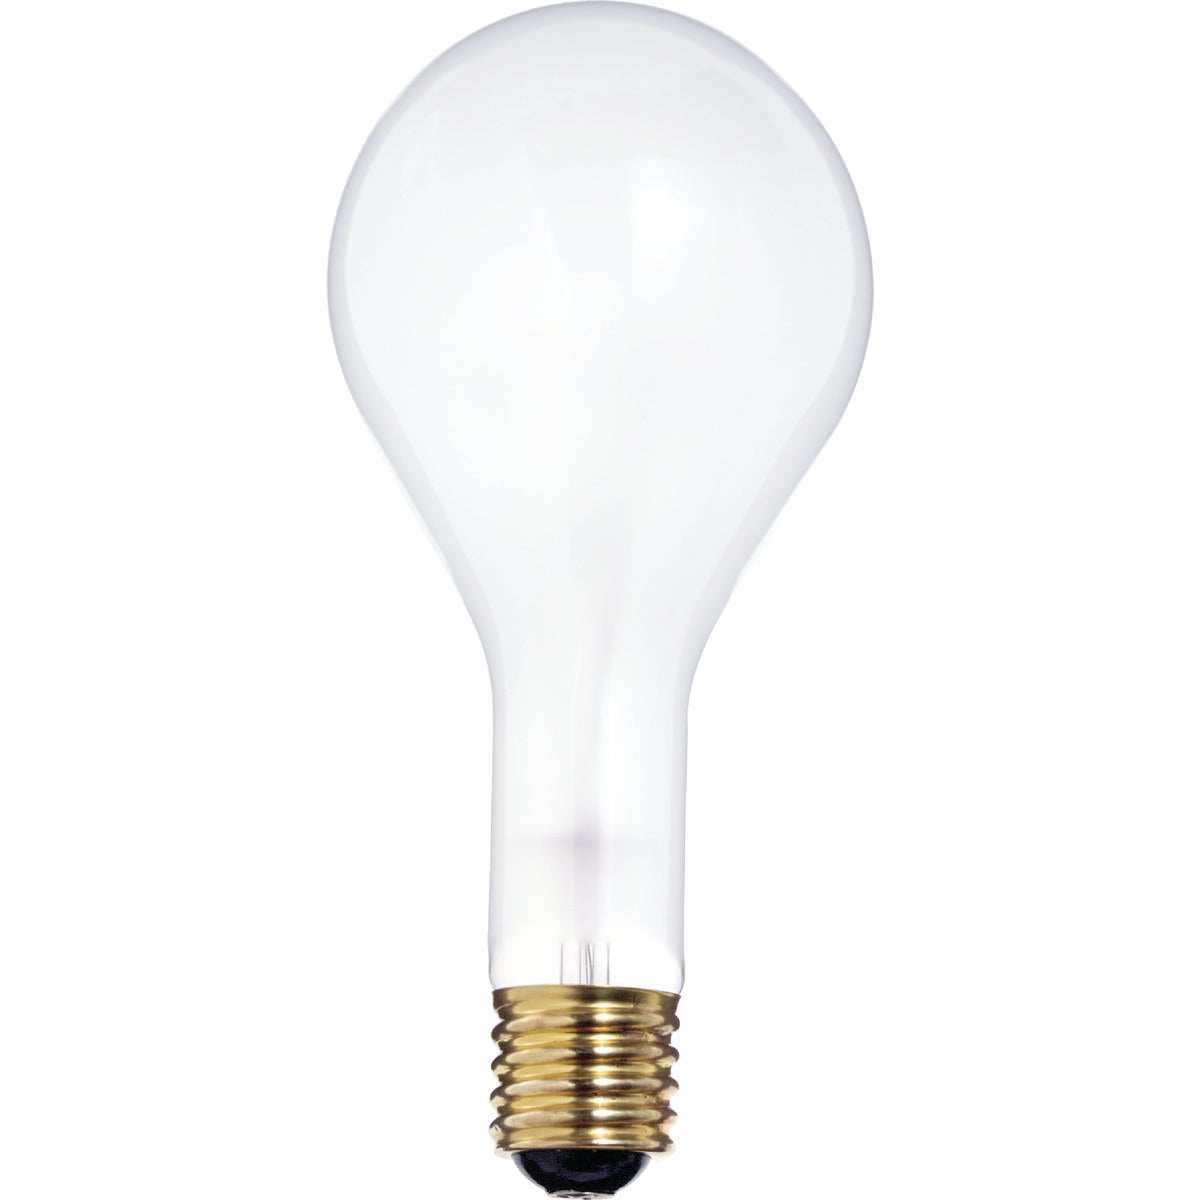 Item 533742, PS35 incandescent light bulb with mogul base.